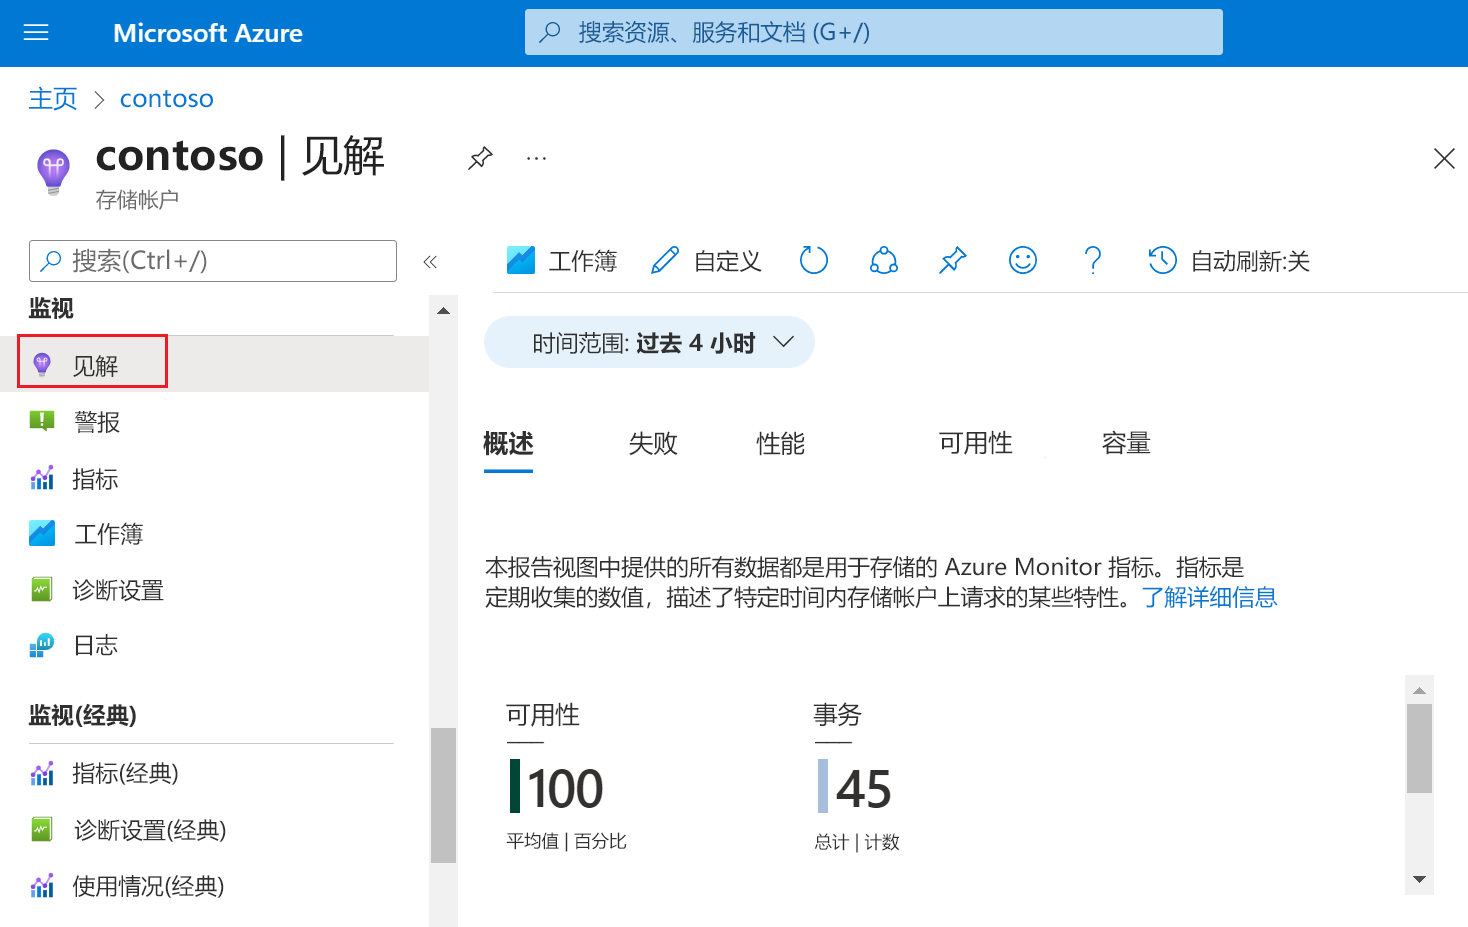 Screenshot of storage Insights in the Azure portal.